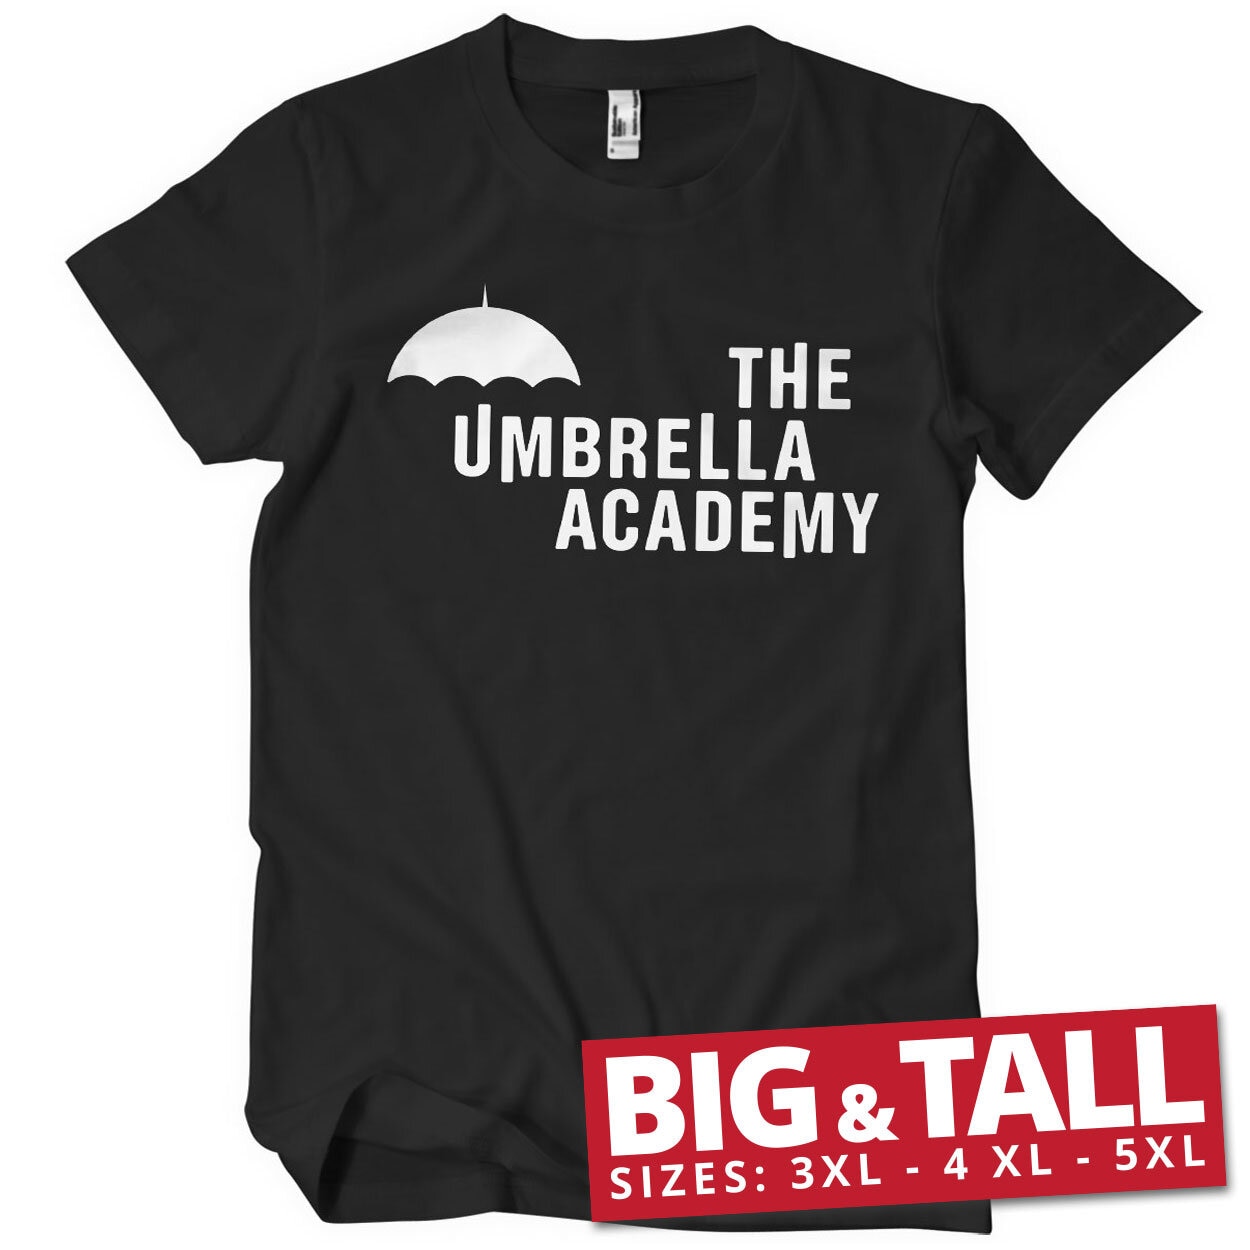 The Umbrella Academy Big & Tall T-Shirt